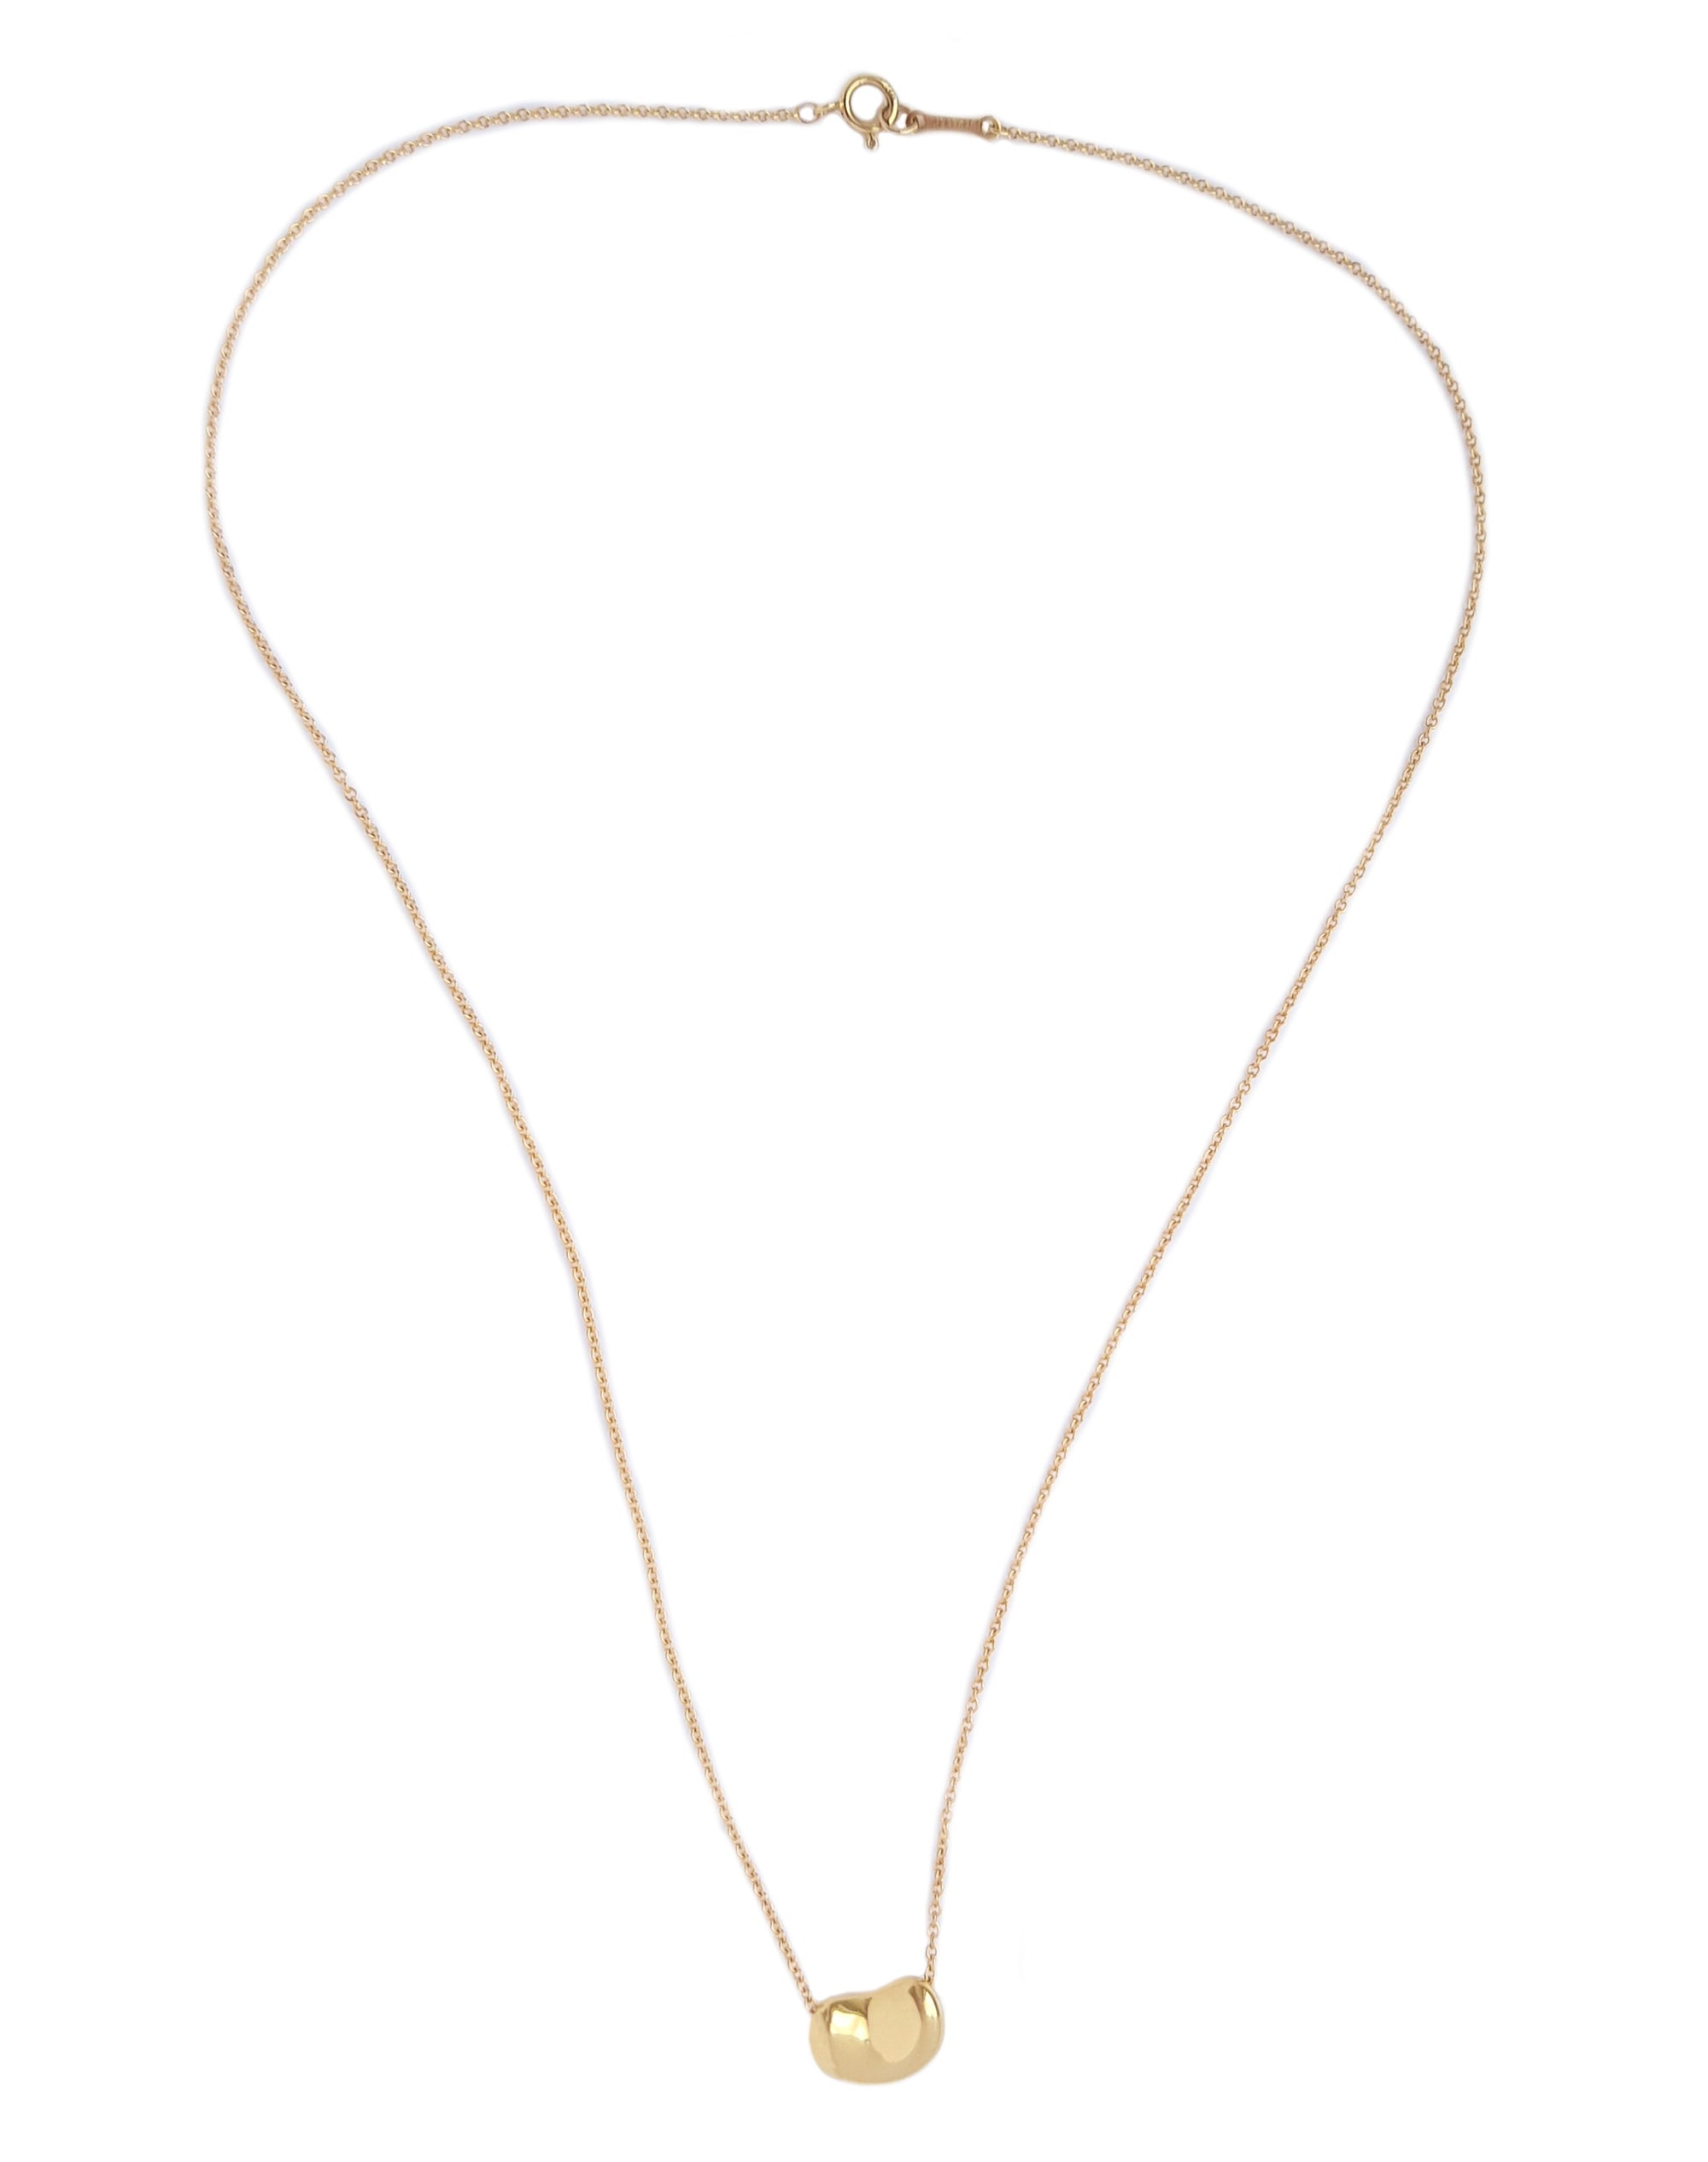 Tiffany & Co Elsa Peretti 750 (Gold) 11mm Bean Necklace 16"